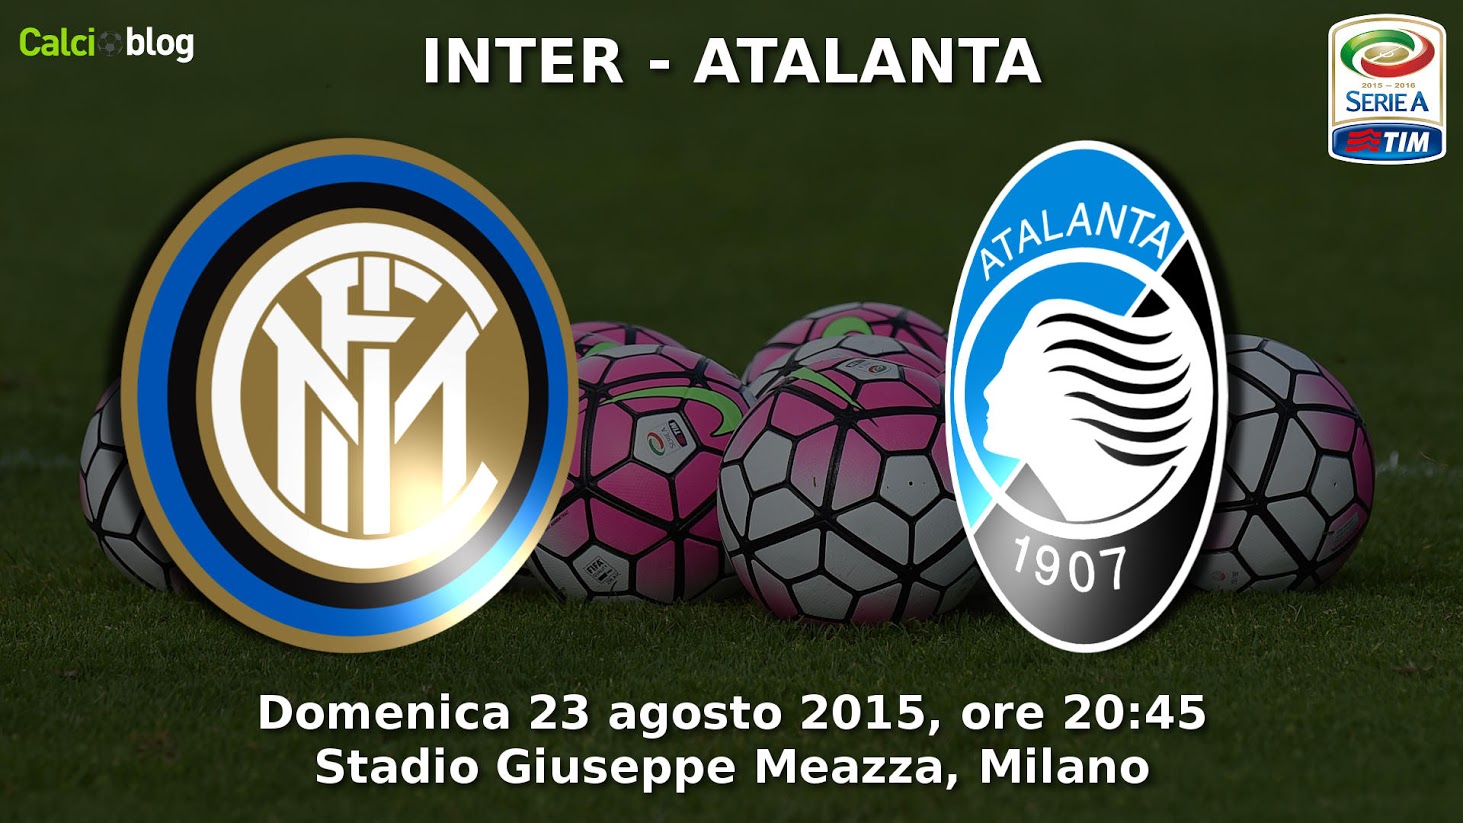 Inter-Atalanta 1-0 Finale | Serie A | Gol di Jovetic